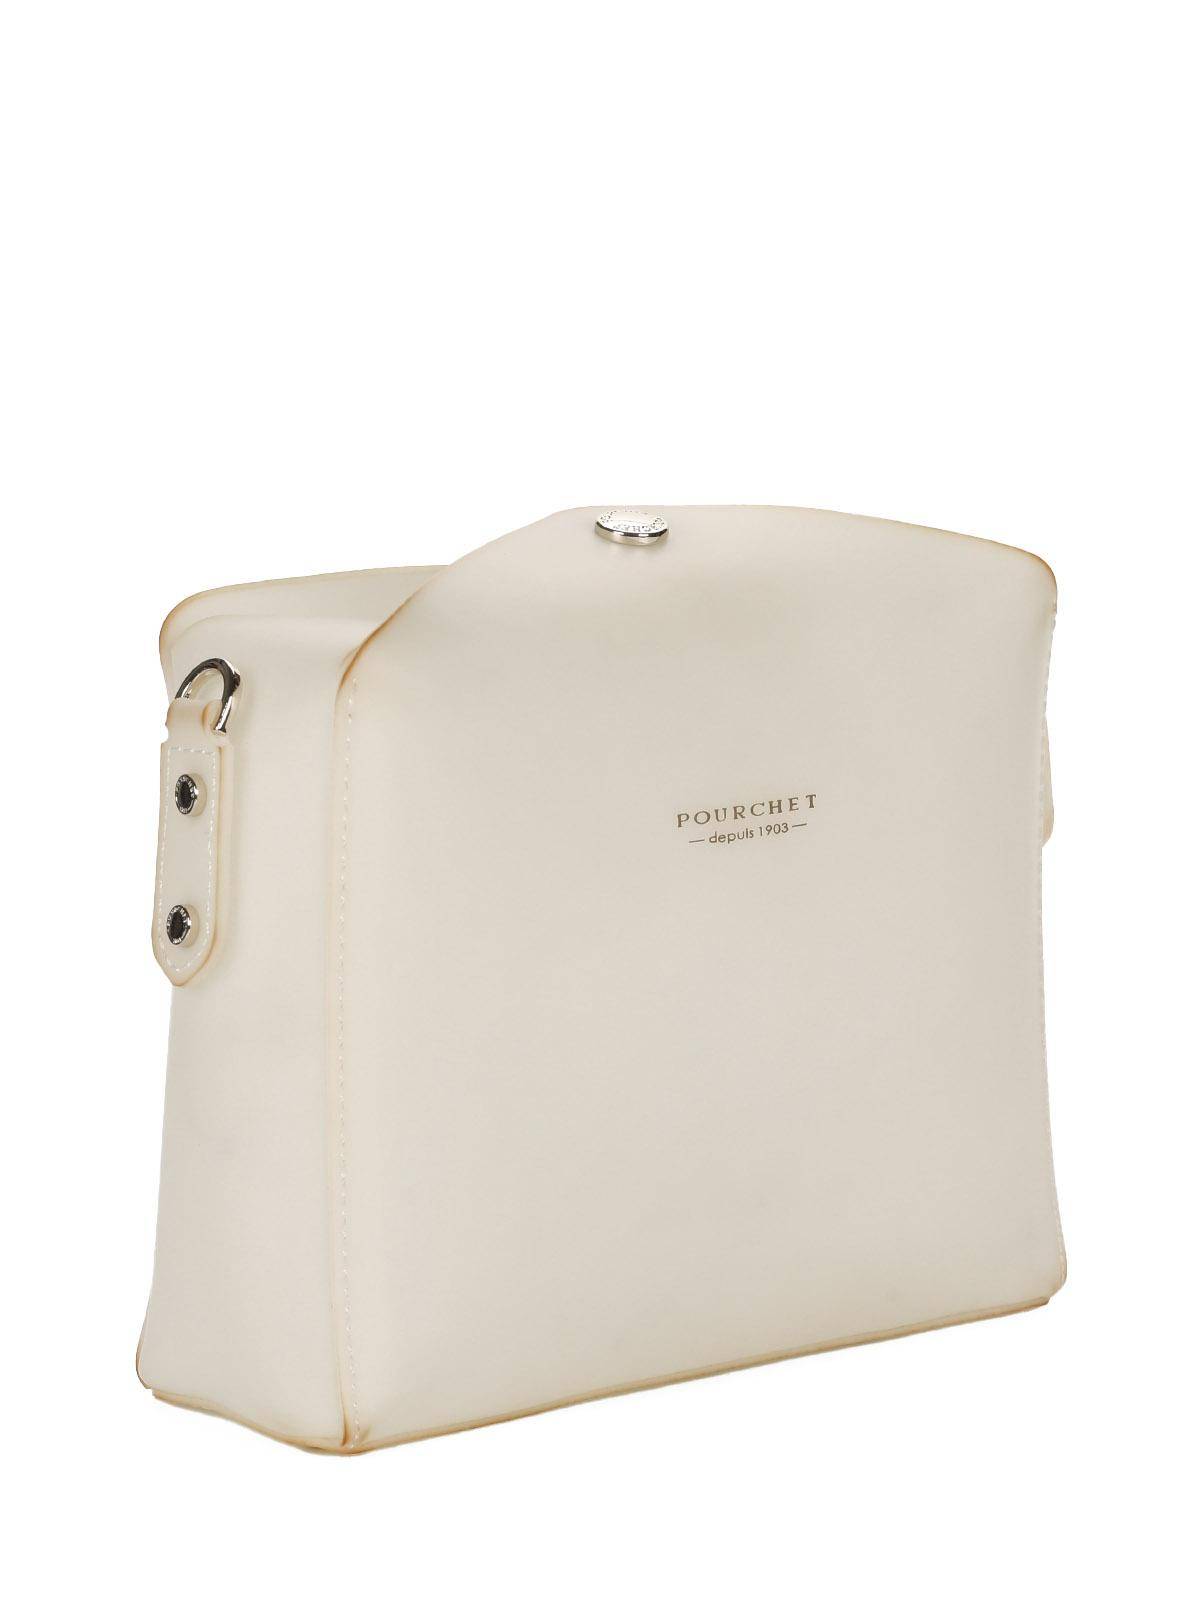 Кросс-боди Maison Pourchet Cassetta Gomme 86102, цвет белый, размер ONE SIZE - фото 2